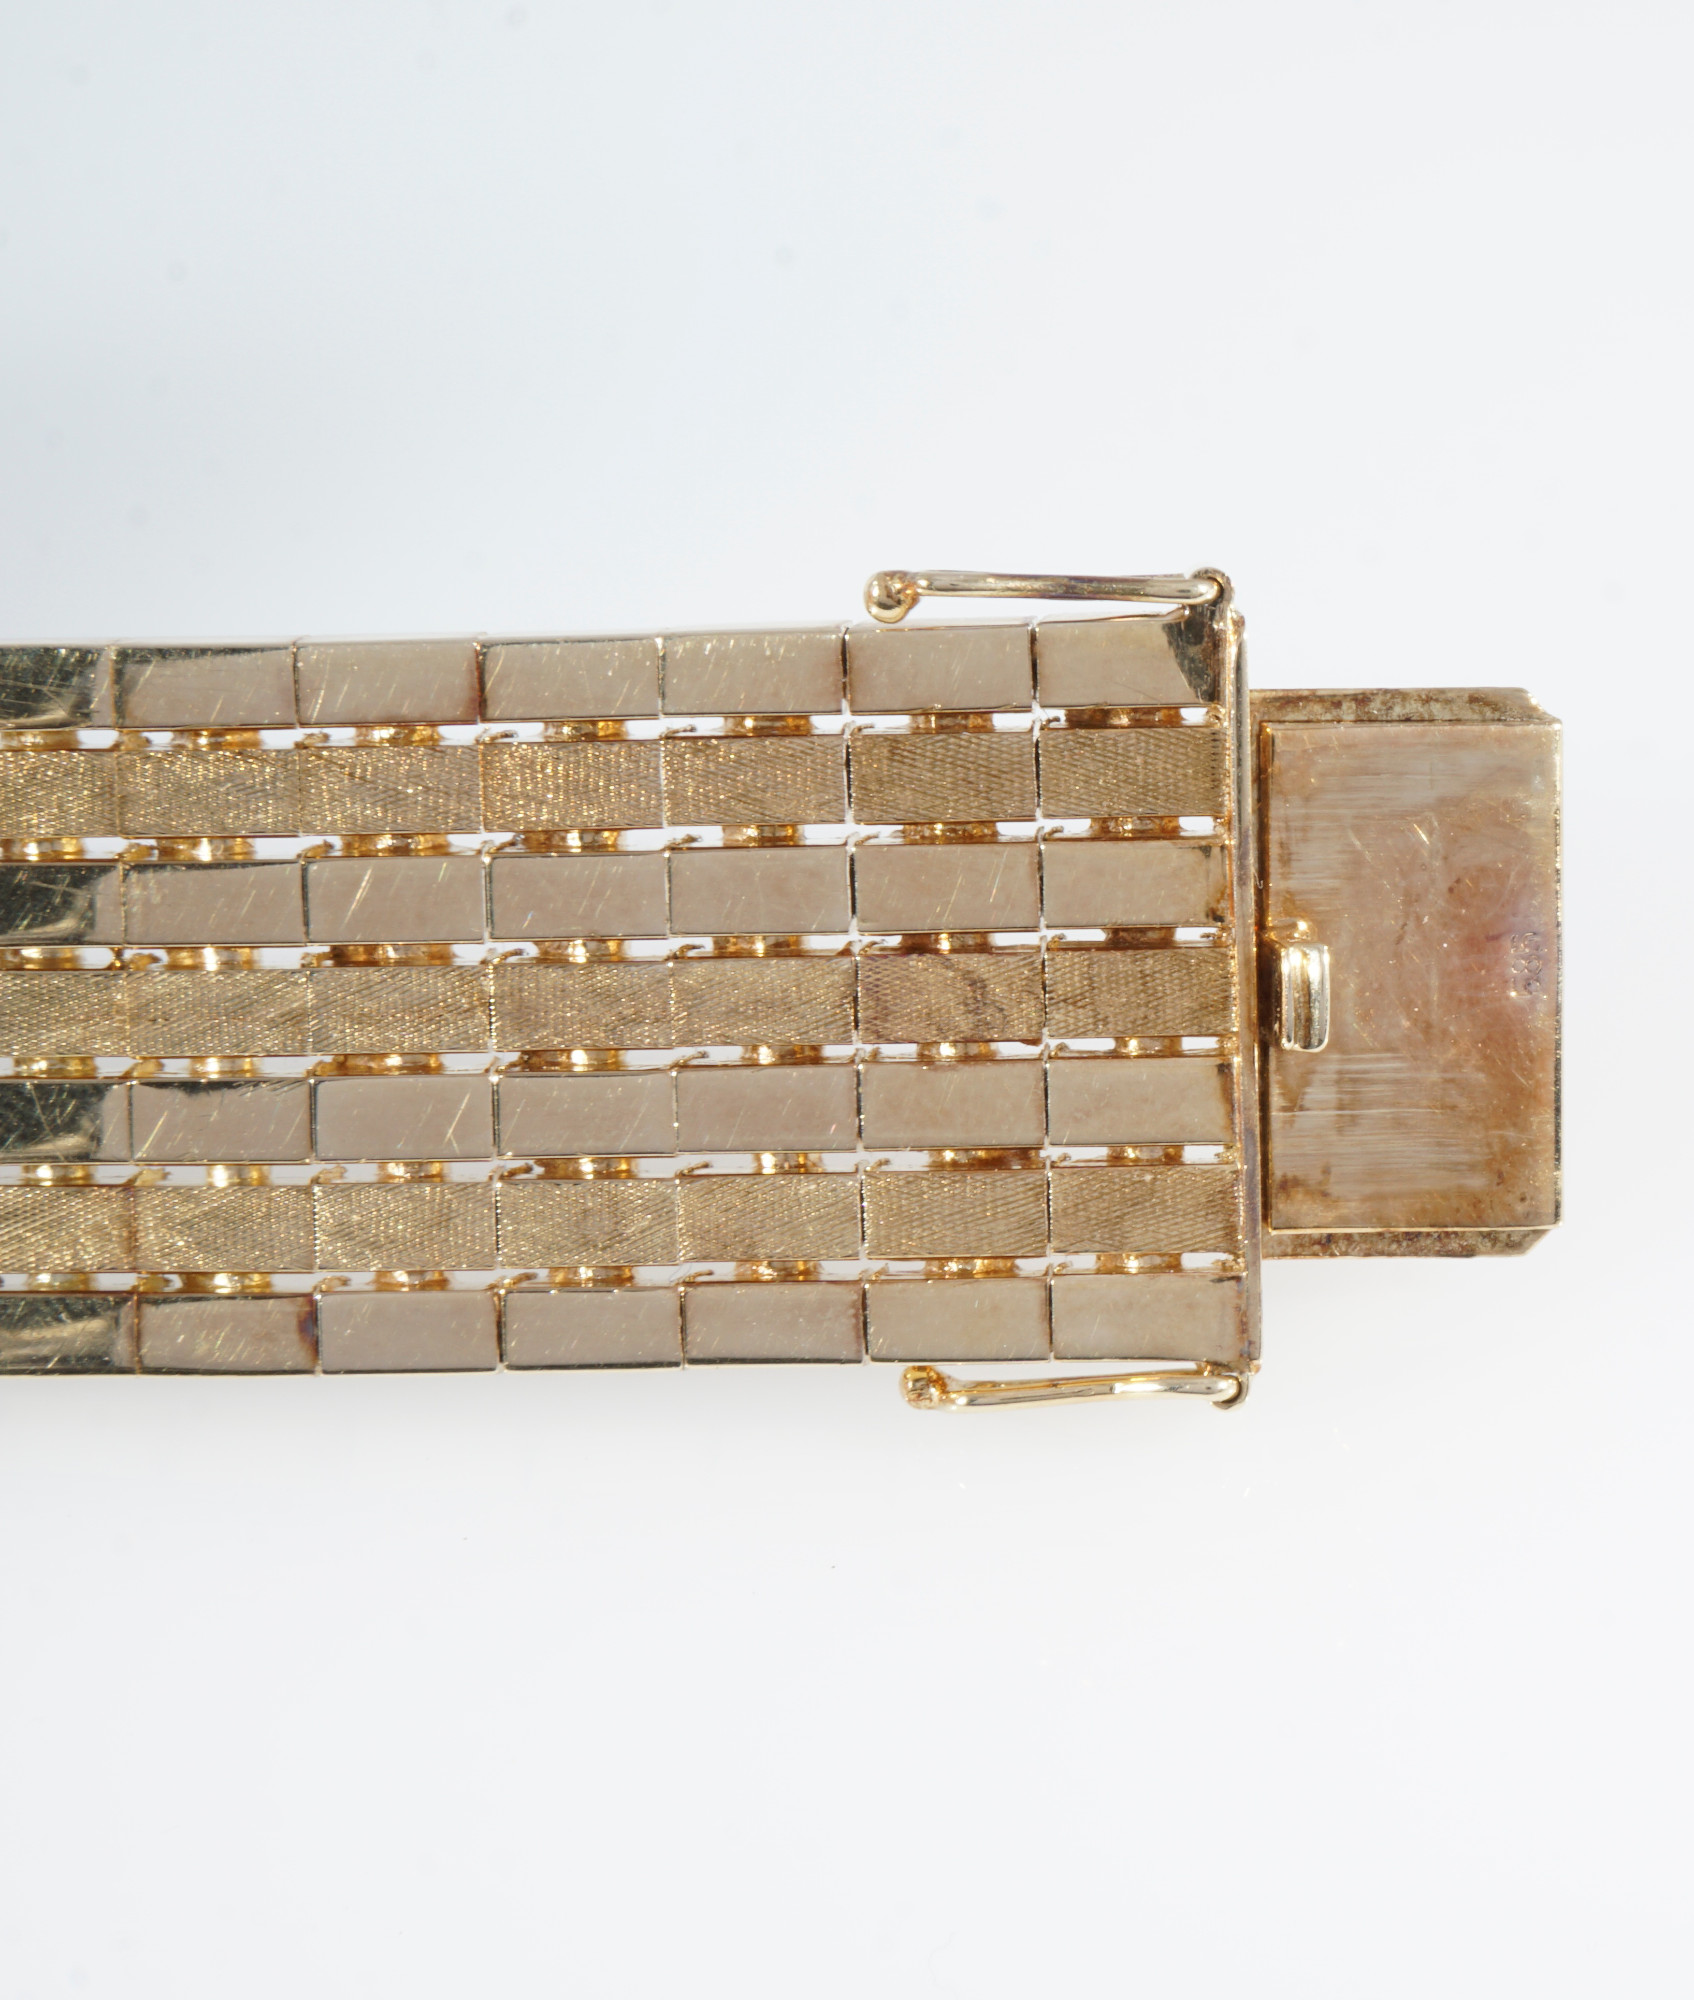 585 gold solid and wide bracelet 71.8 grams, 14K Gold massives und Breites Armband, - Image 5 of 5